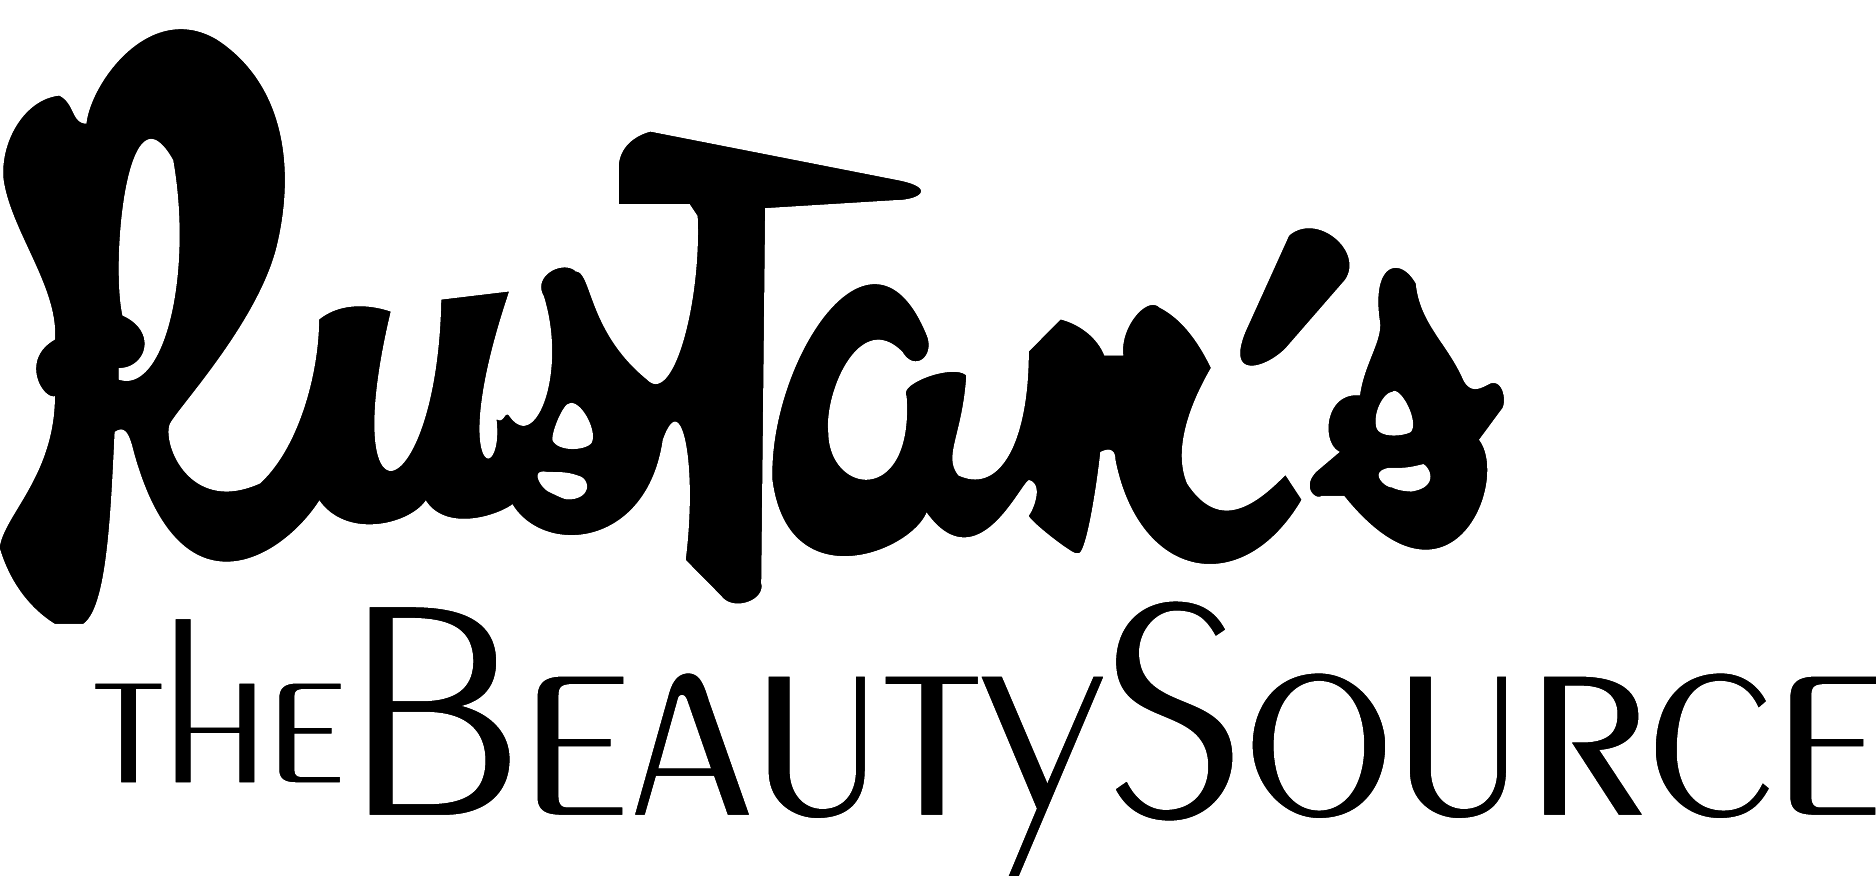 Rustan's The Beauty Source